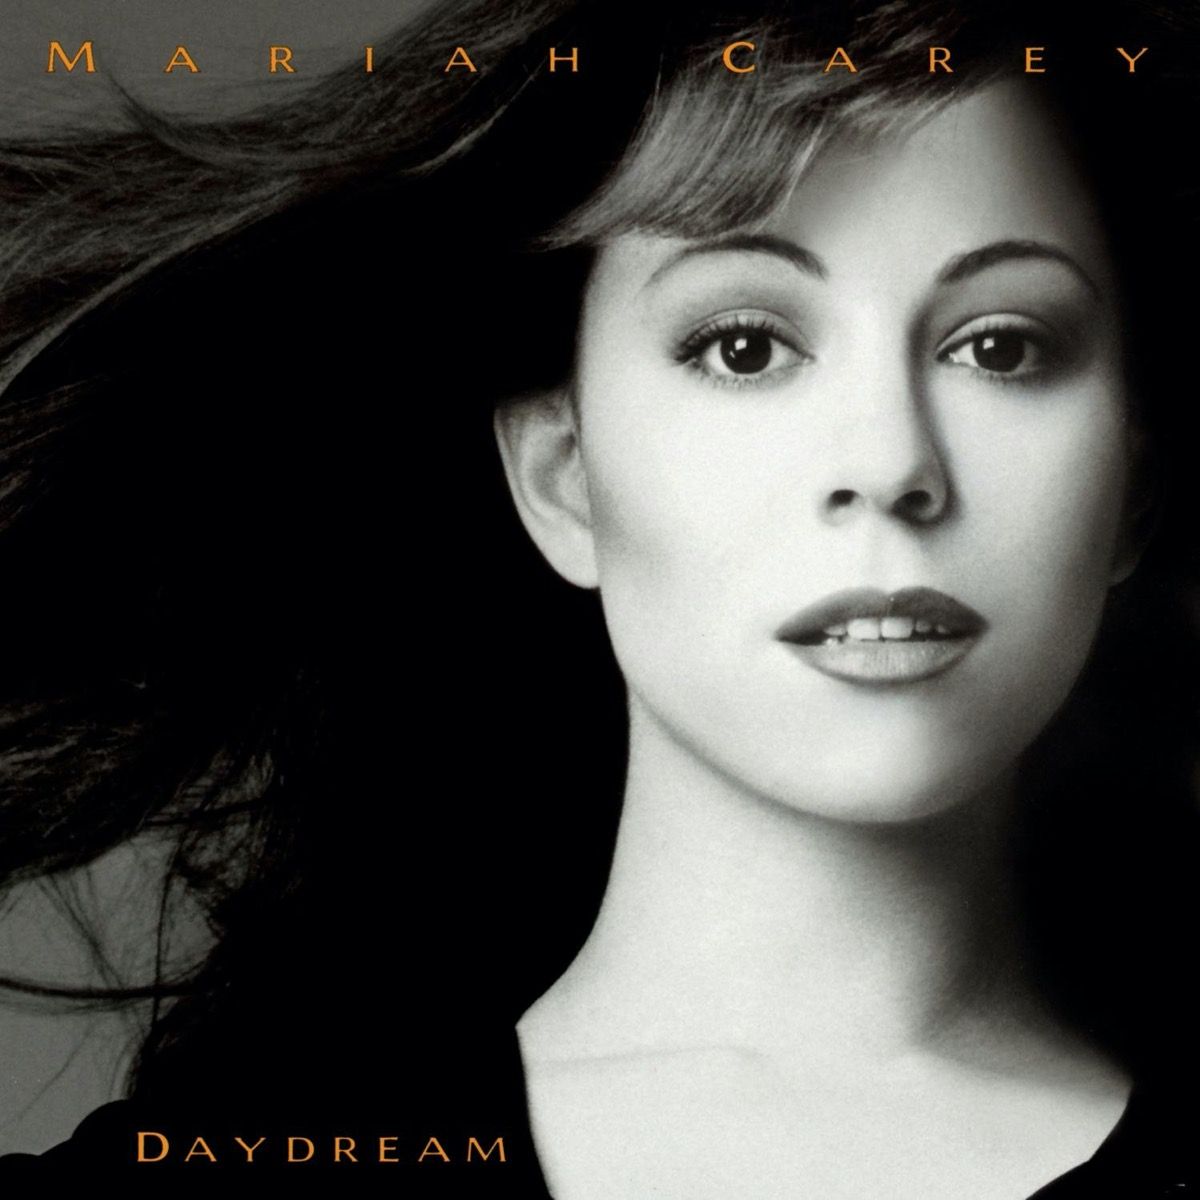 Kulit album Mariah Carey Daydream